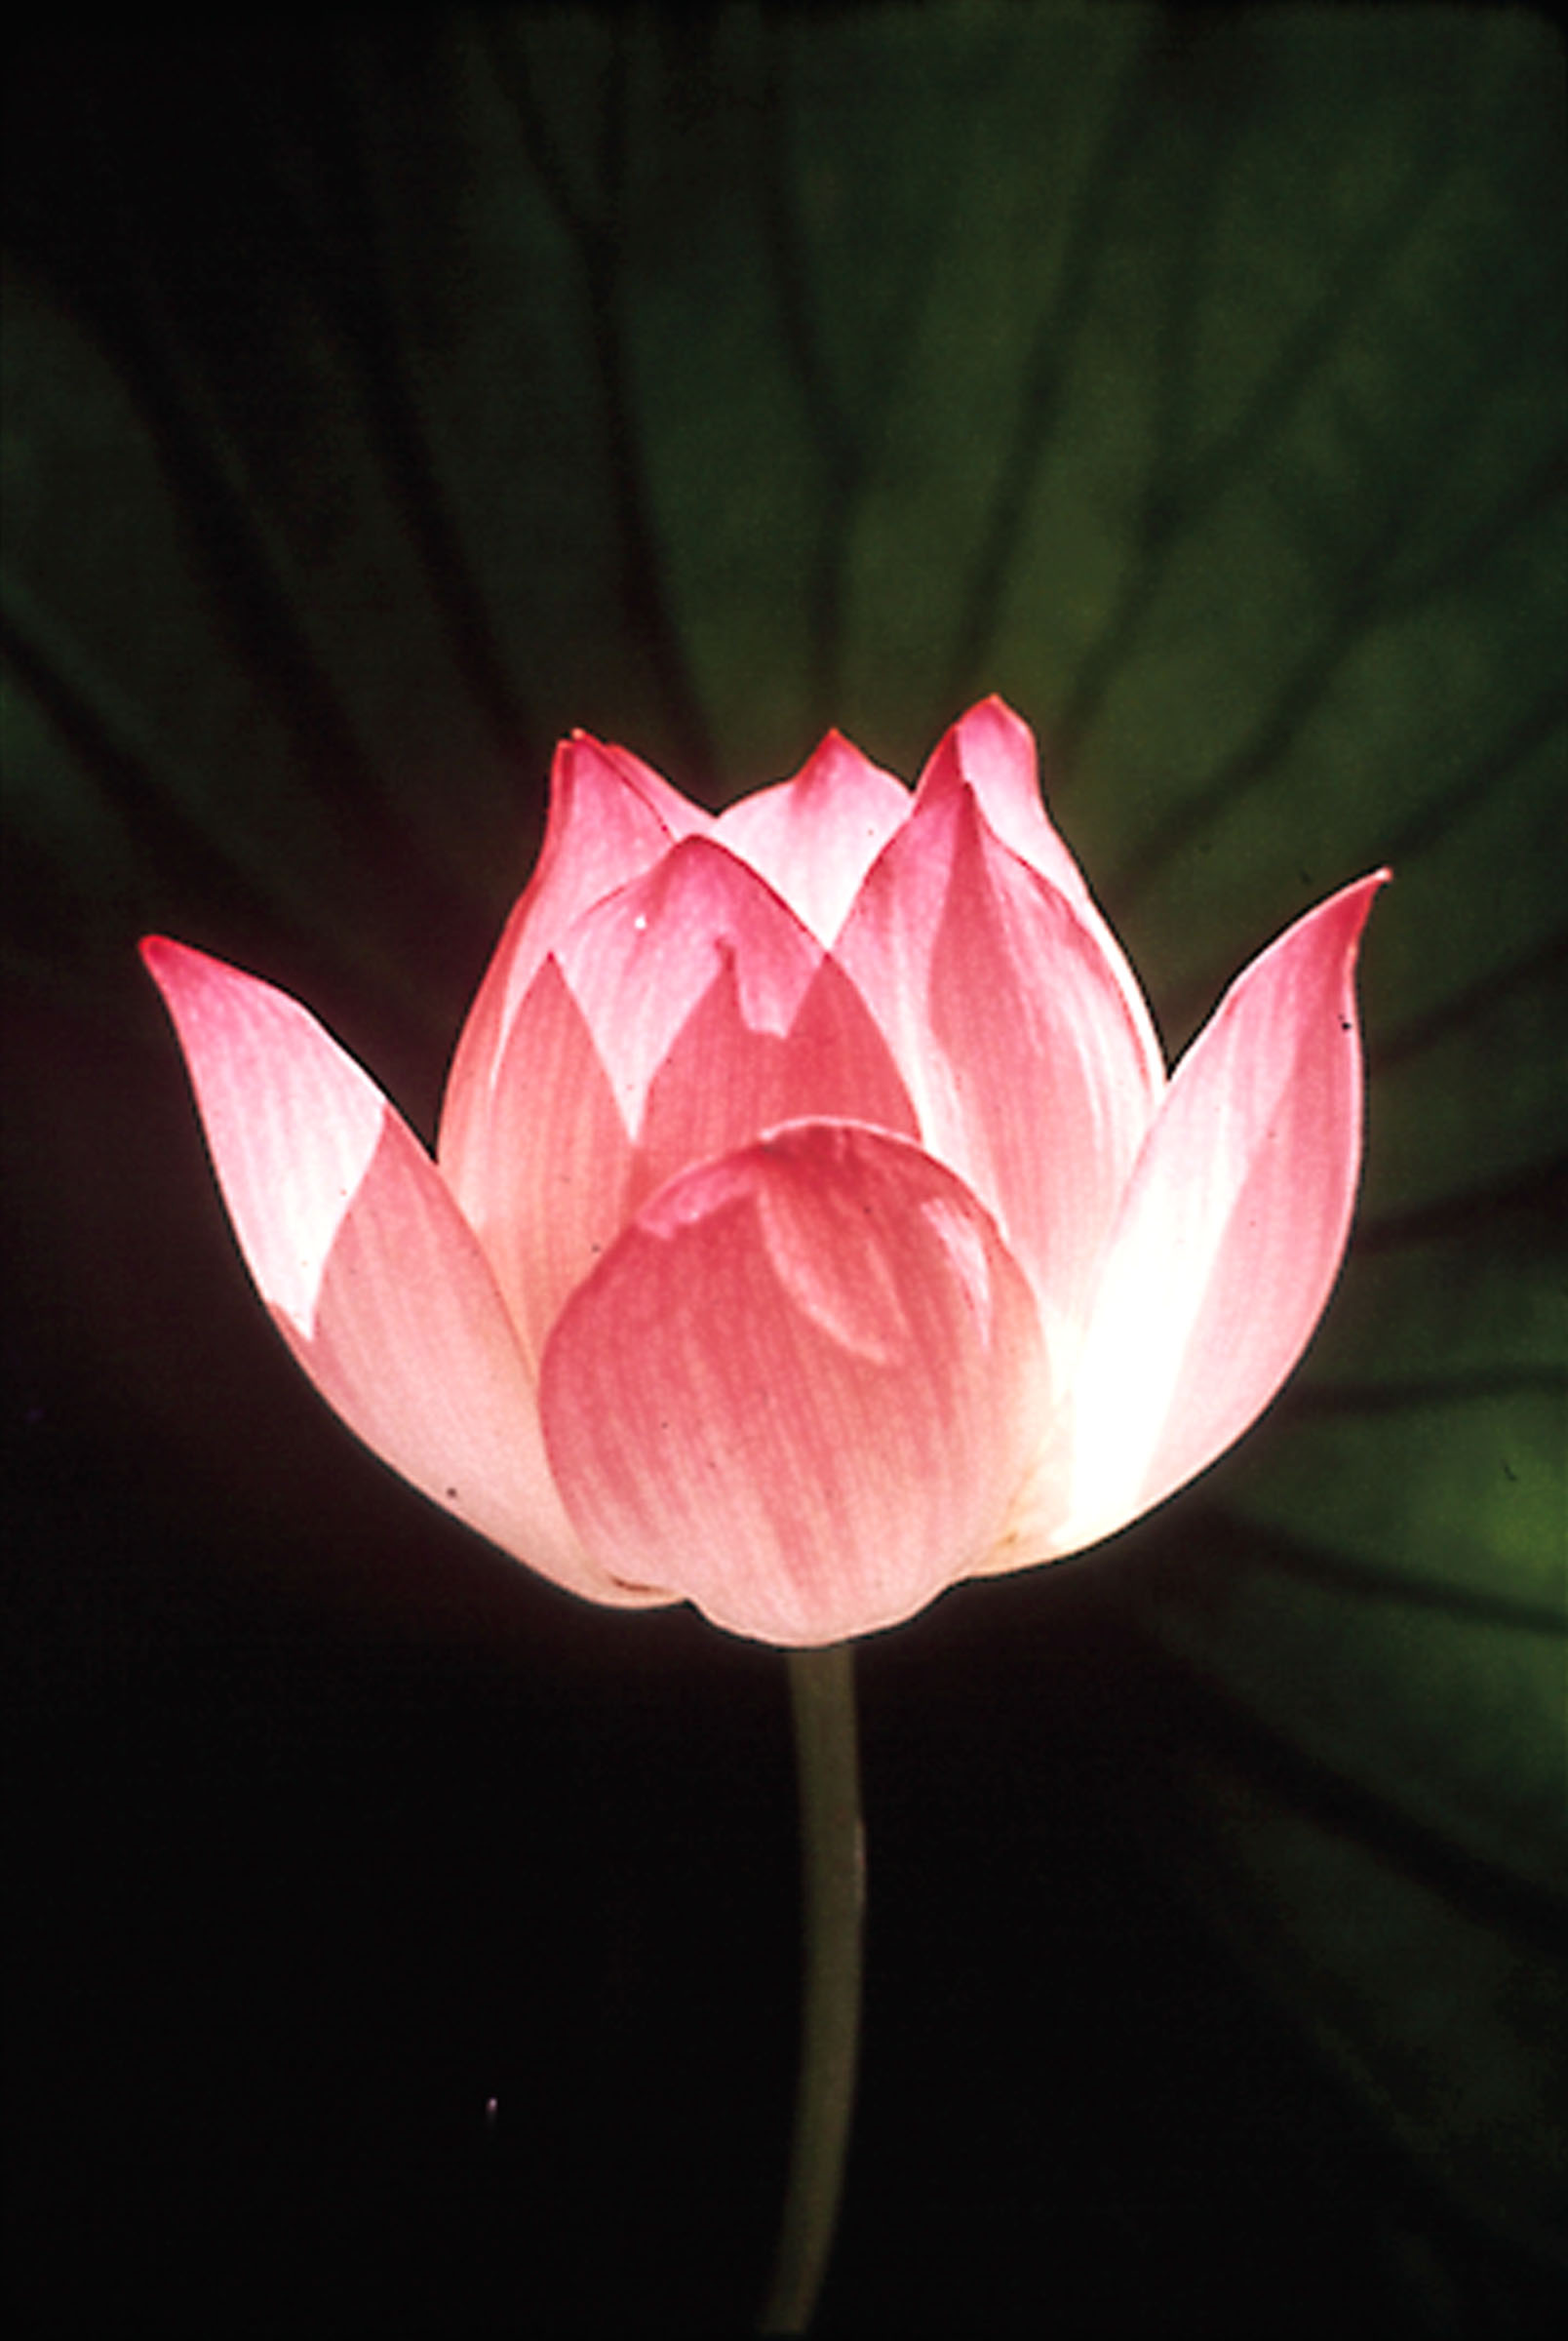 Lotus depicting non-attachment quality of Spirit.